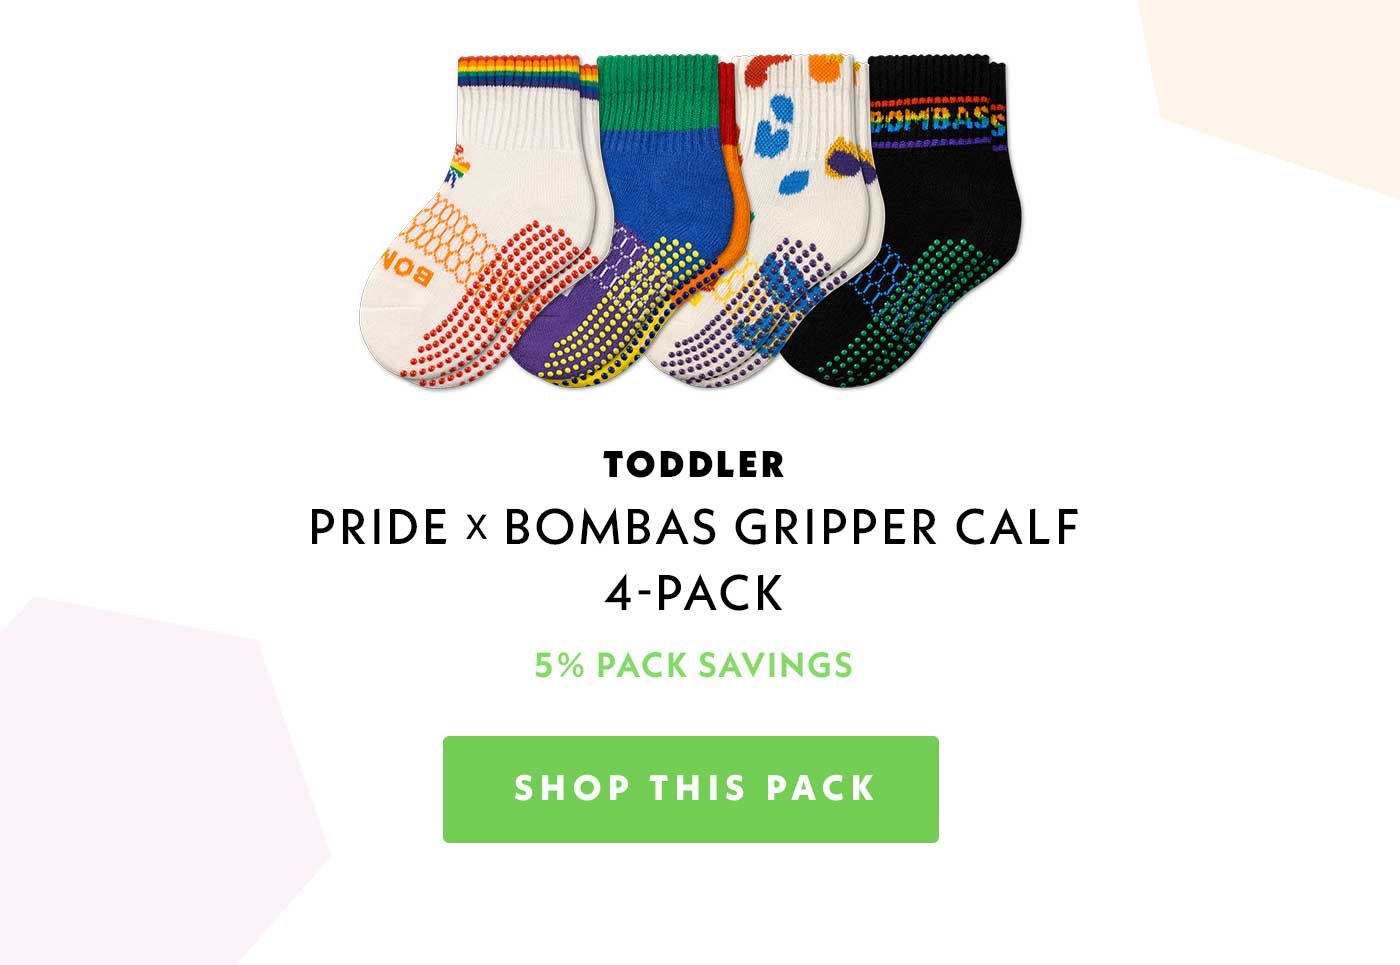 Toddler Pride x Bombas Gripper Calf 4-Pack | 5% Pack Savings | Shop This Pack